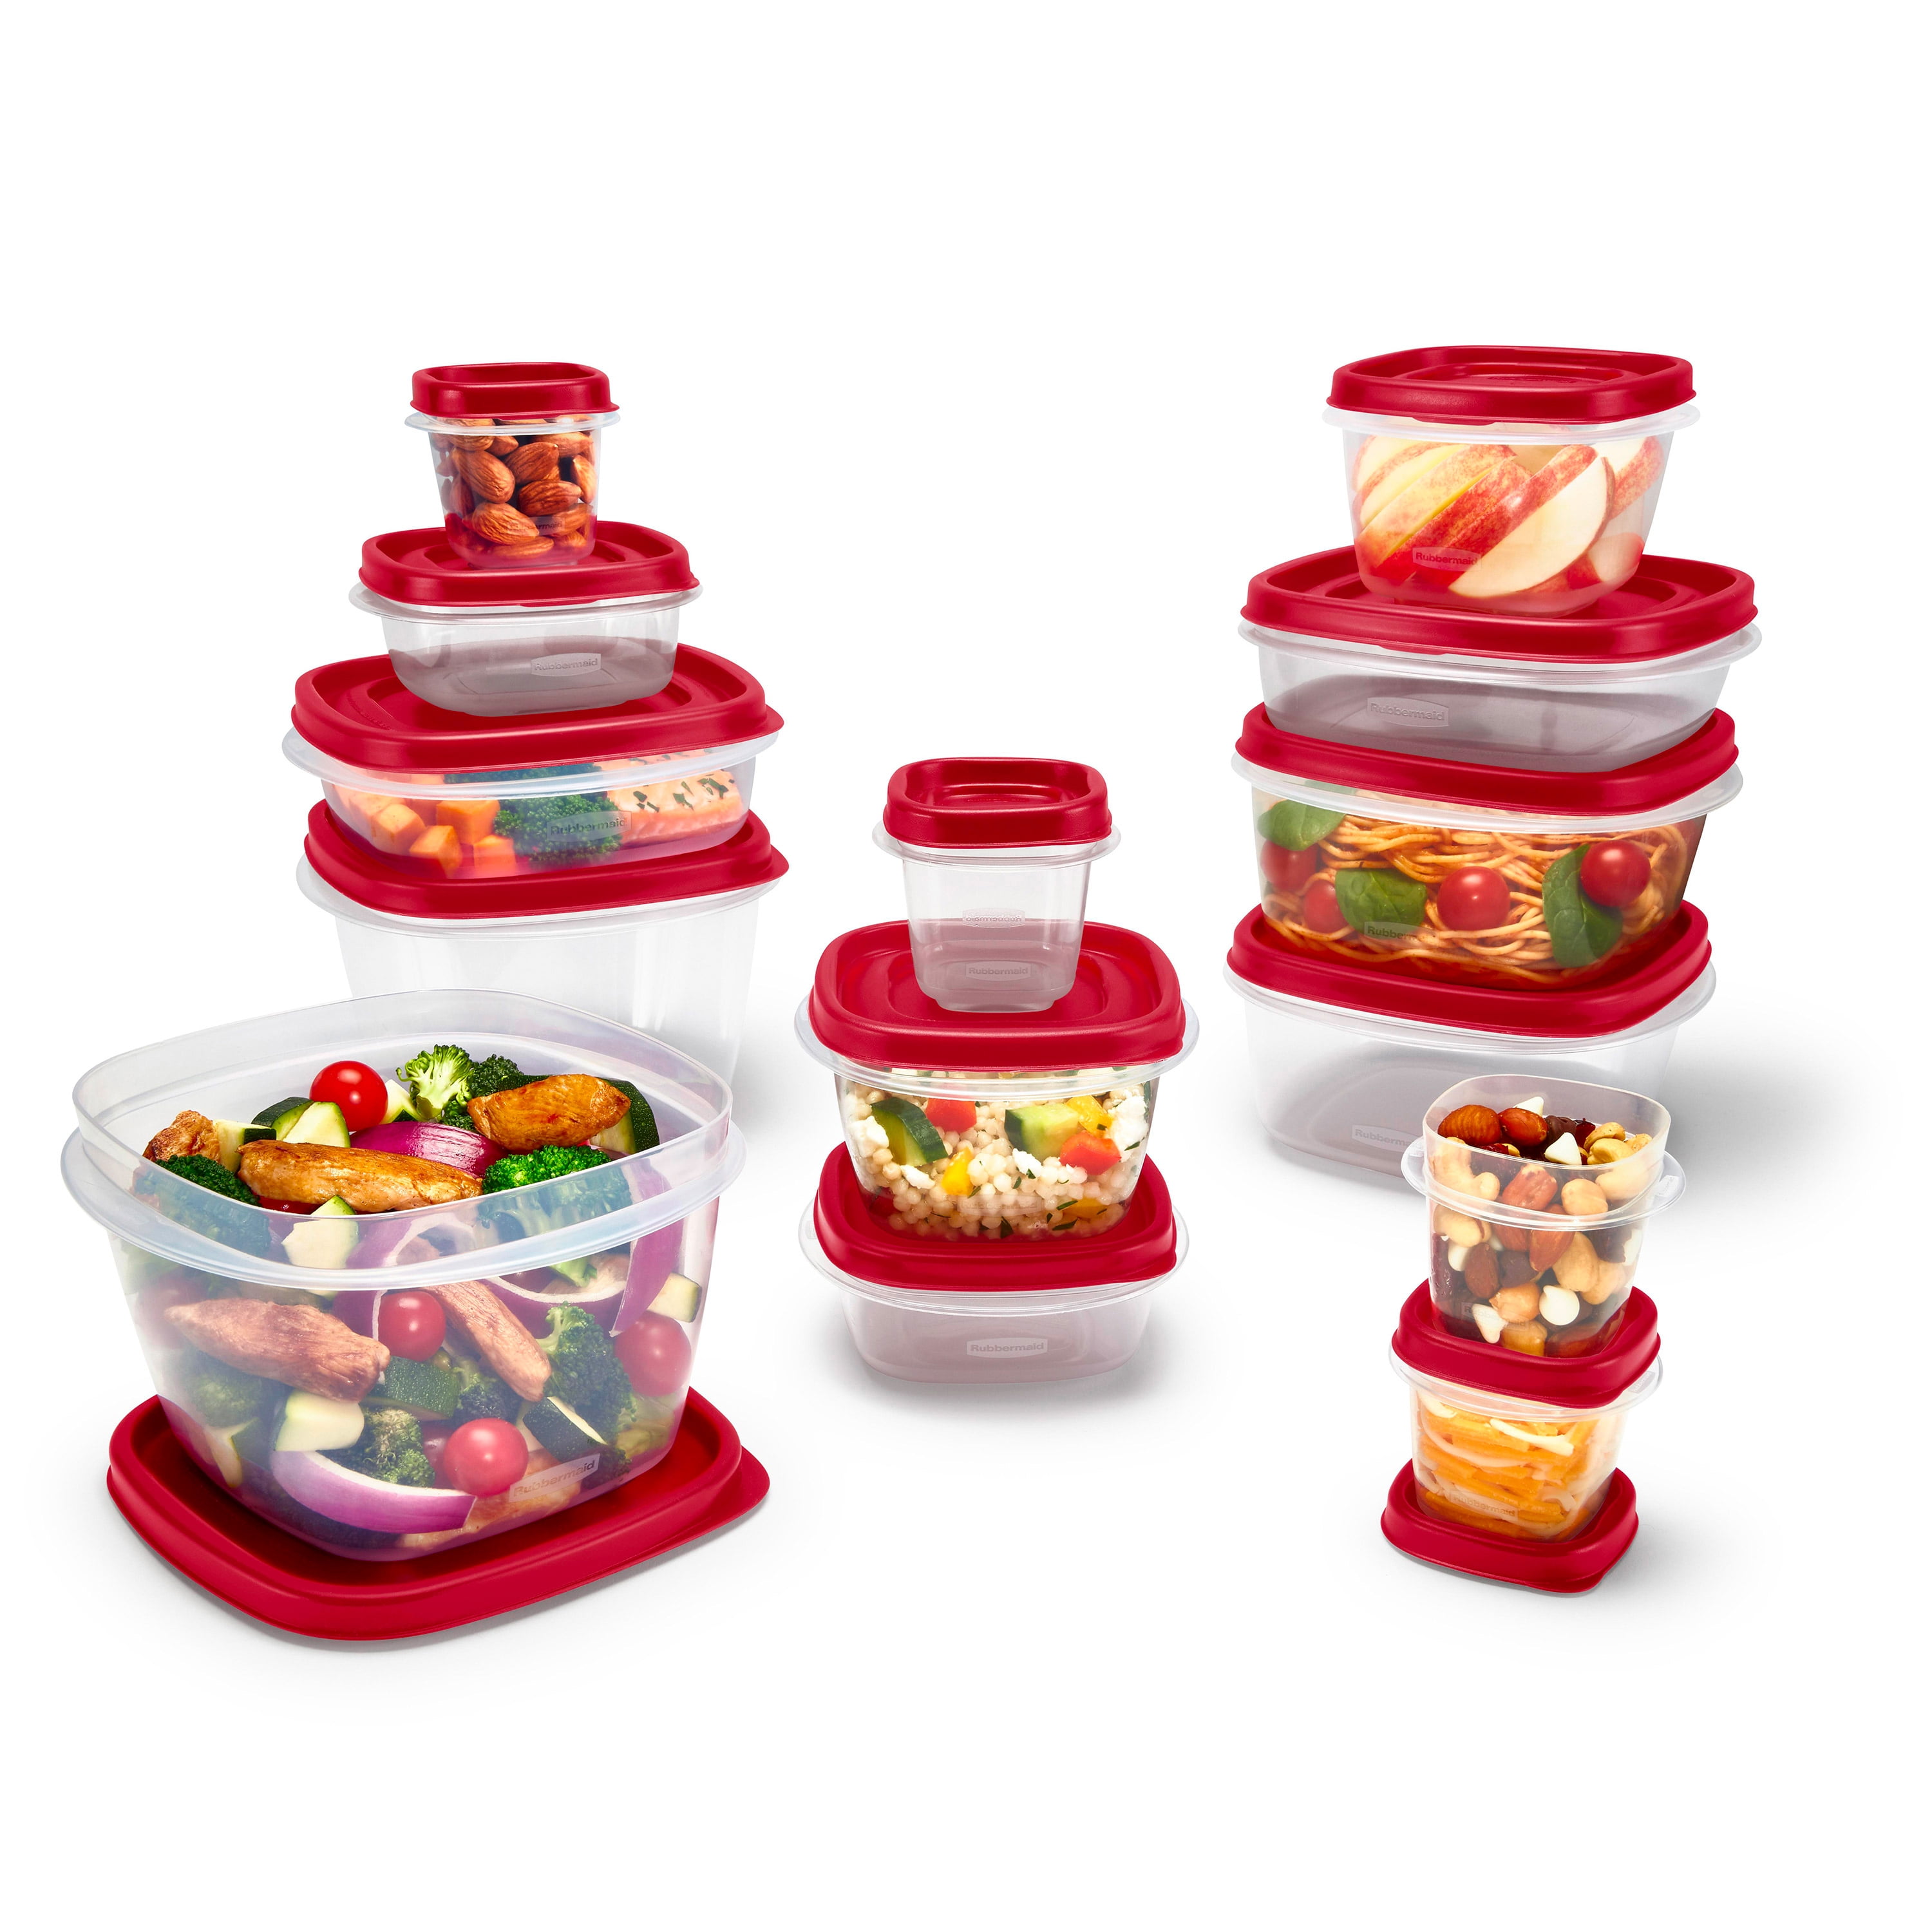 Rubbermaid Meal Prep Premier Food Storage Container, 28 Piece Set